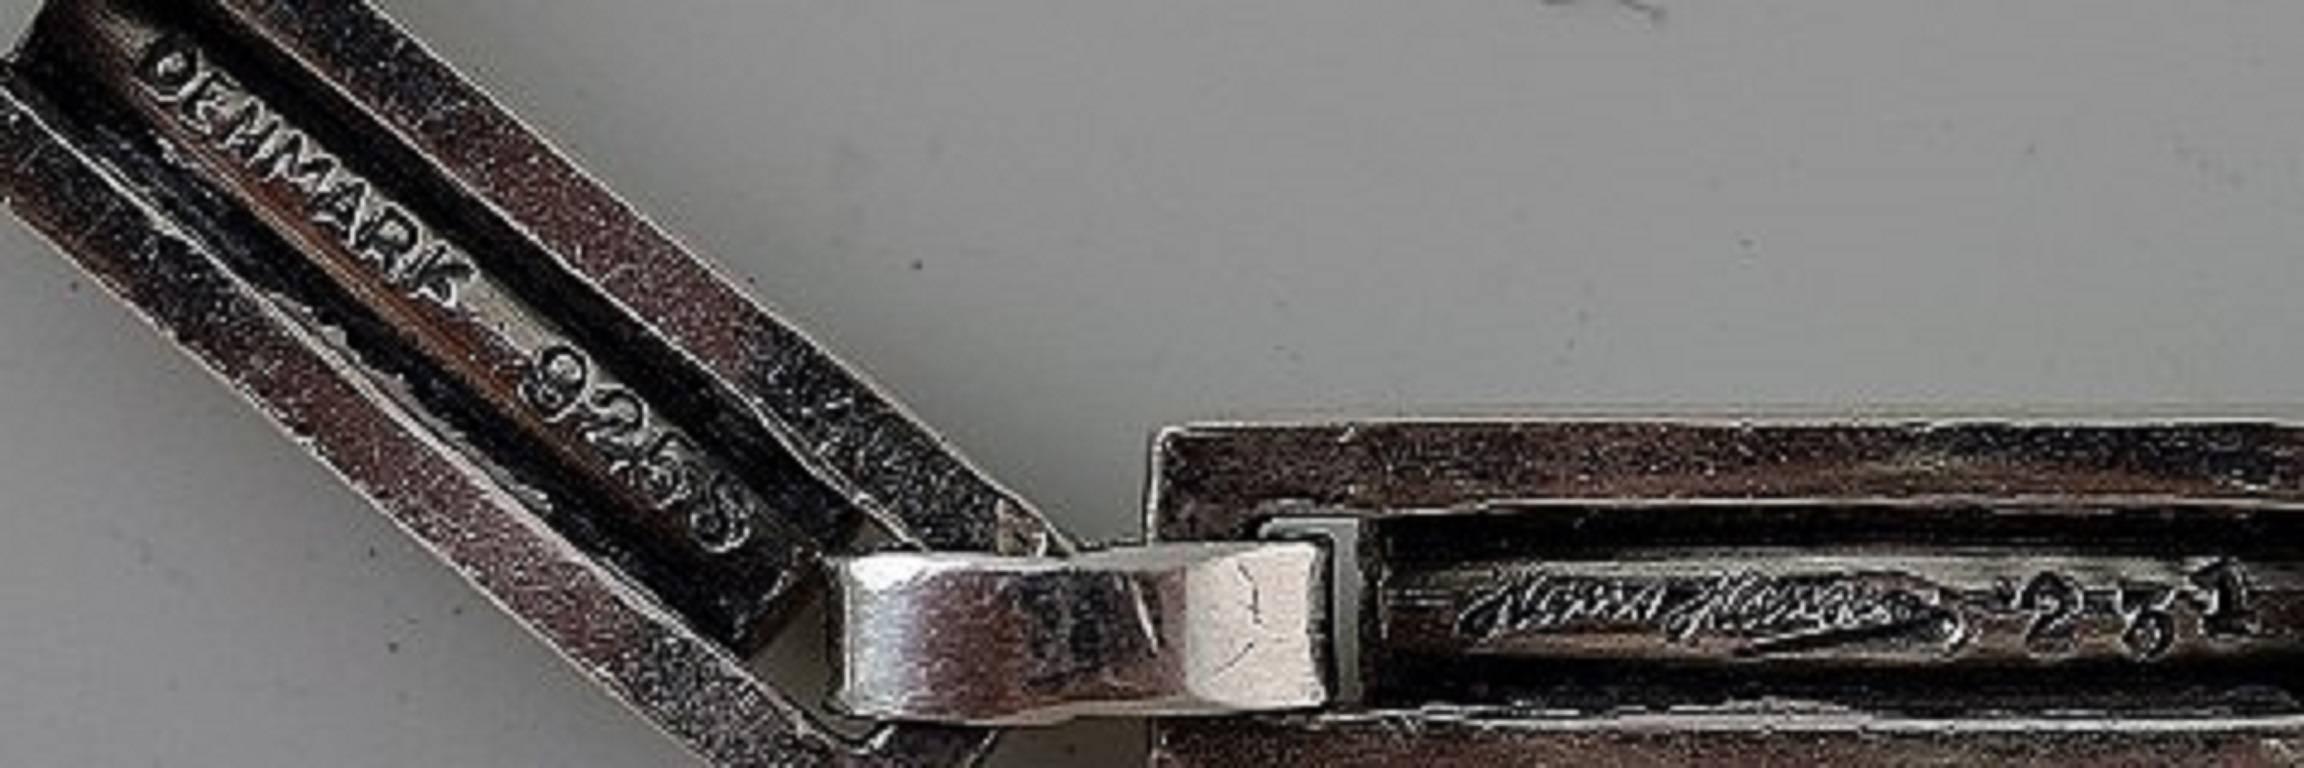 Hans Hansen bracelet of sterling silver.
Marked Hans Hansen 925S Denmark.
Length 18-19 cm.
In perfect condition.